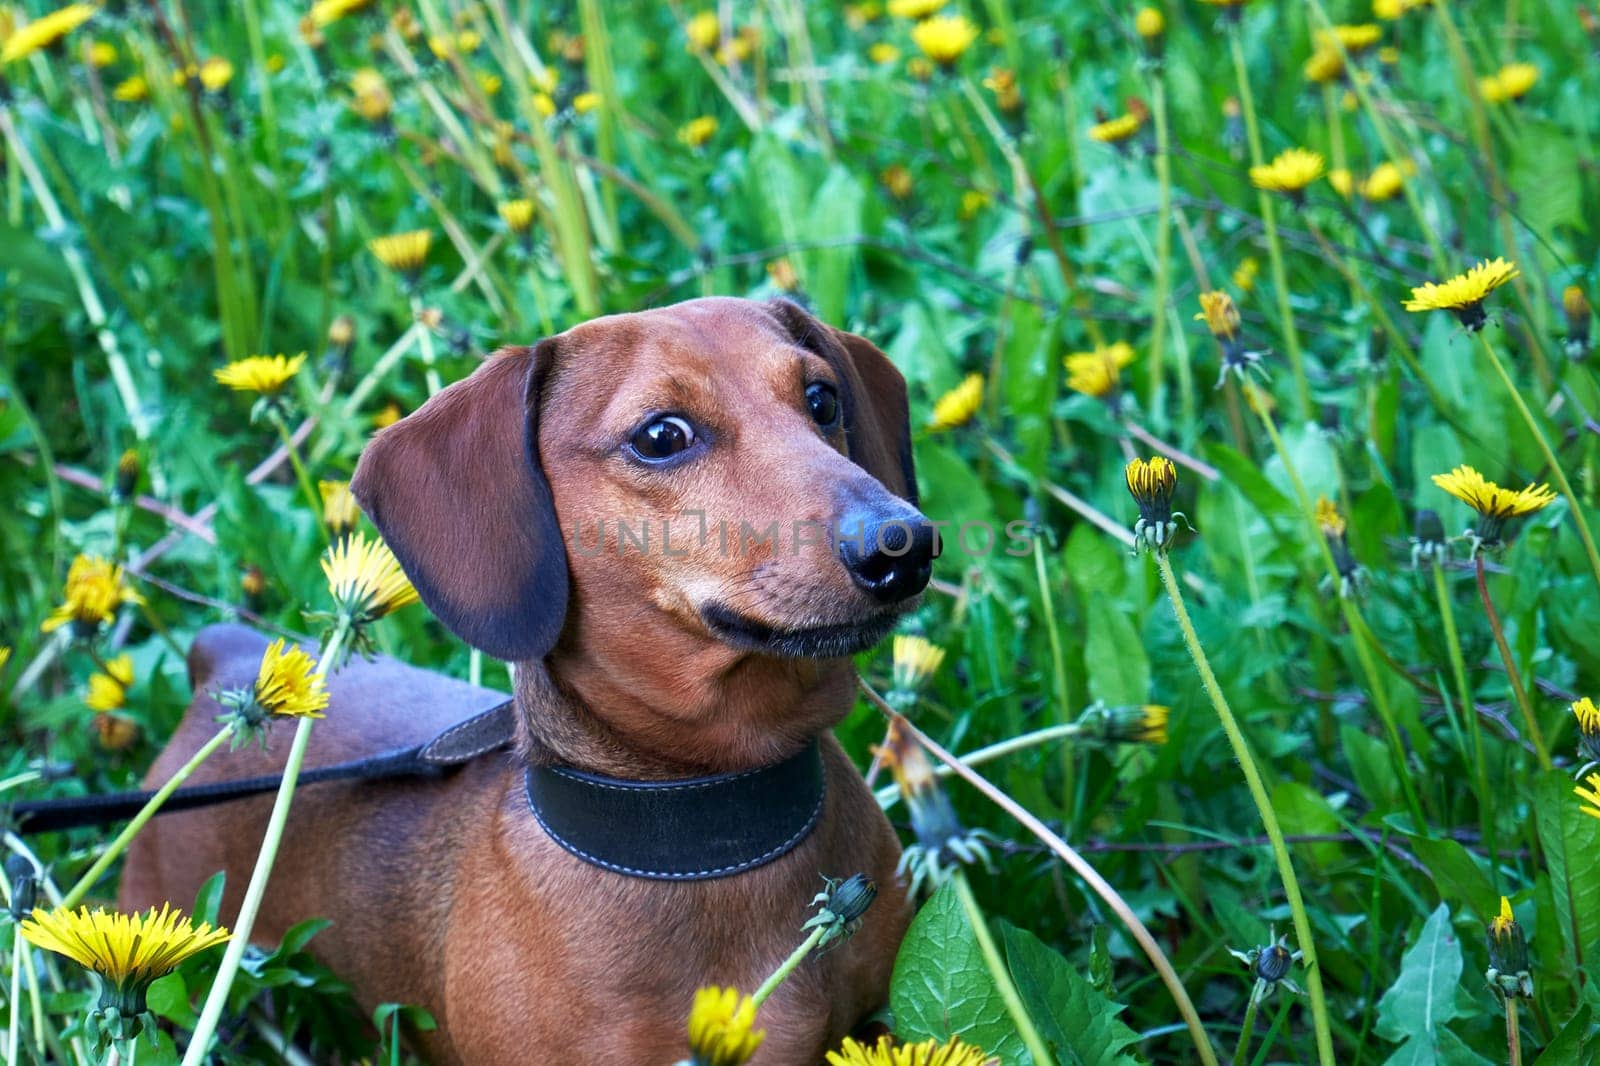 Dachshund walking in a field among green grass and yellow dandelions. Mini dachshund among grass and dandelions. Walking with a dog in nature